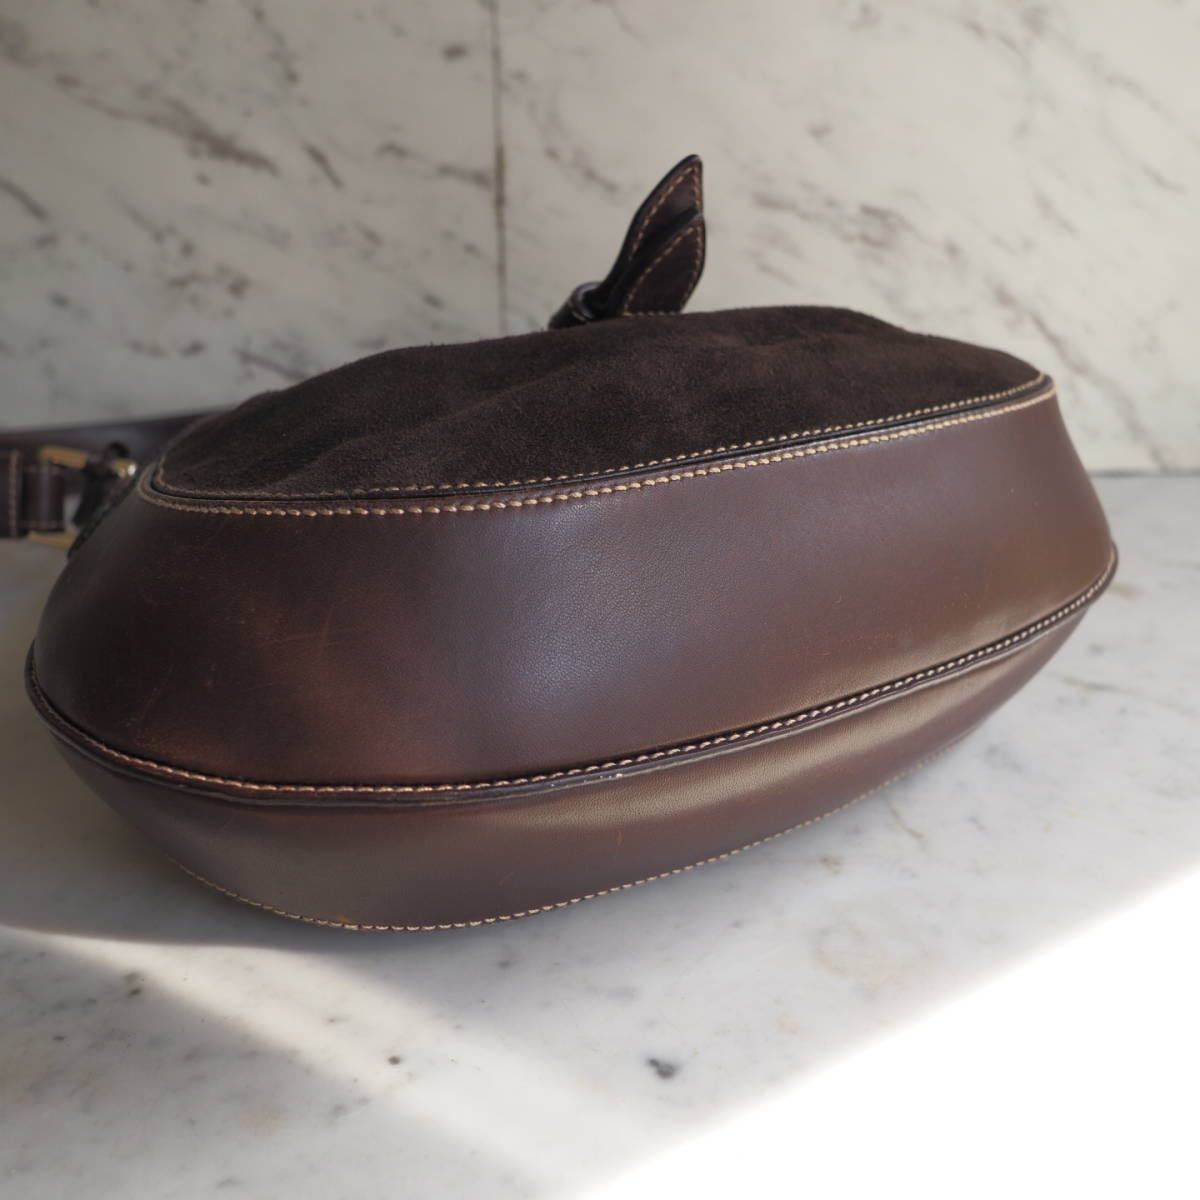  Bally BALLY код CODE замша кожа сумка на плечо Италия производства темно-коричневый 